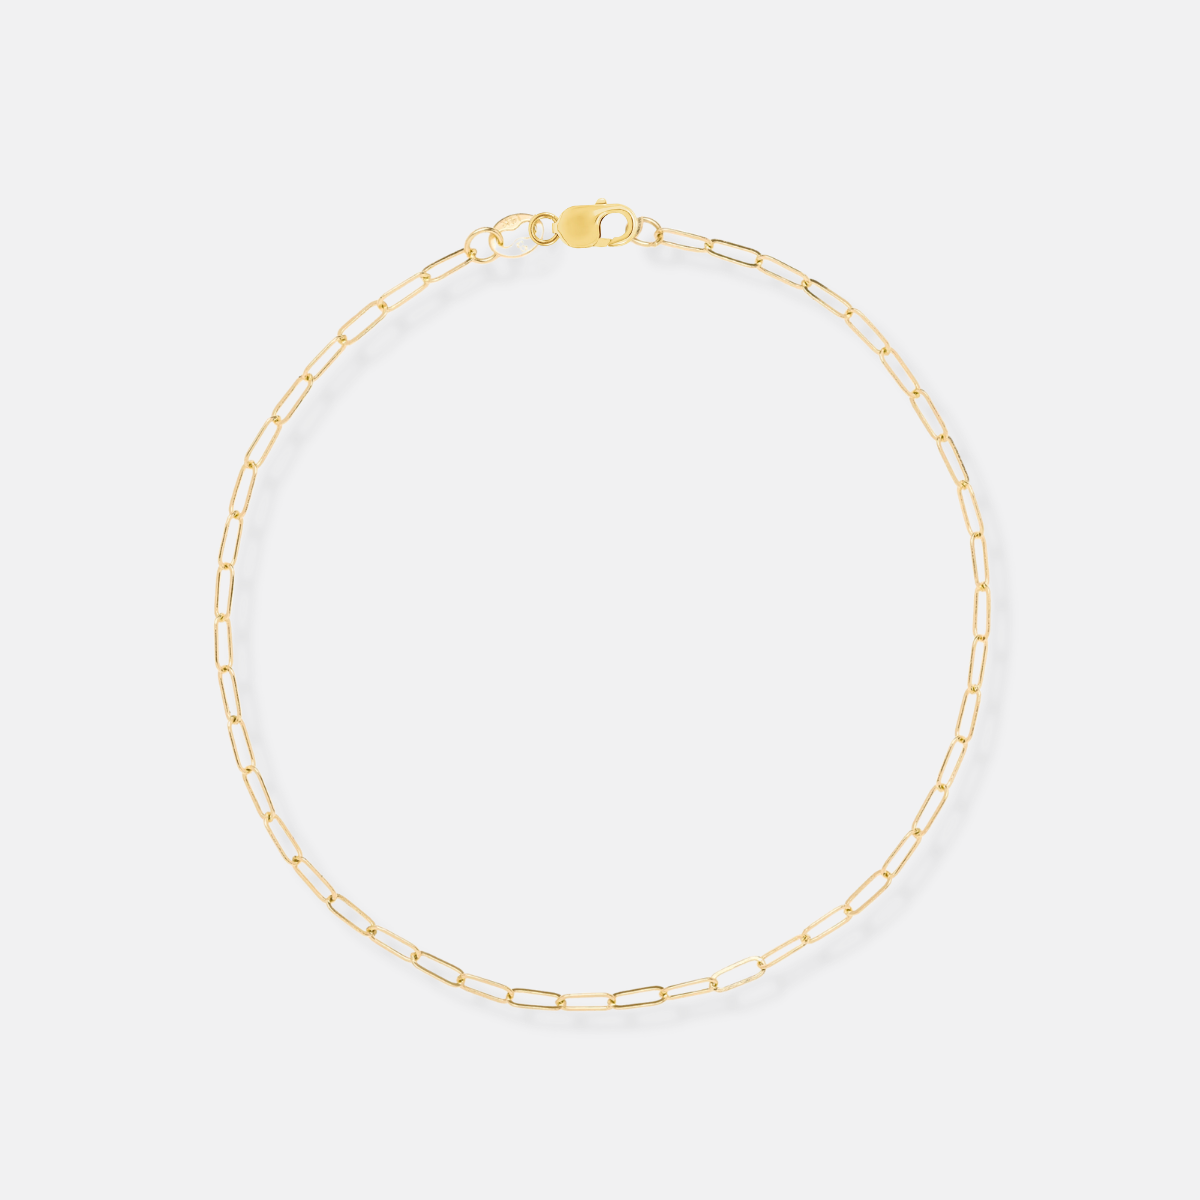 Paperclip chain bracelet - dainty